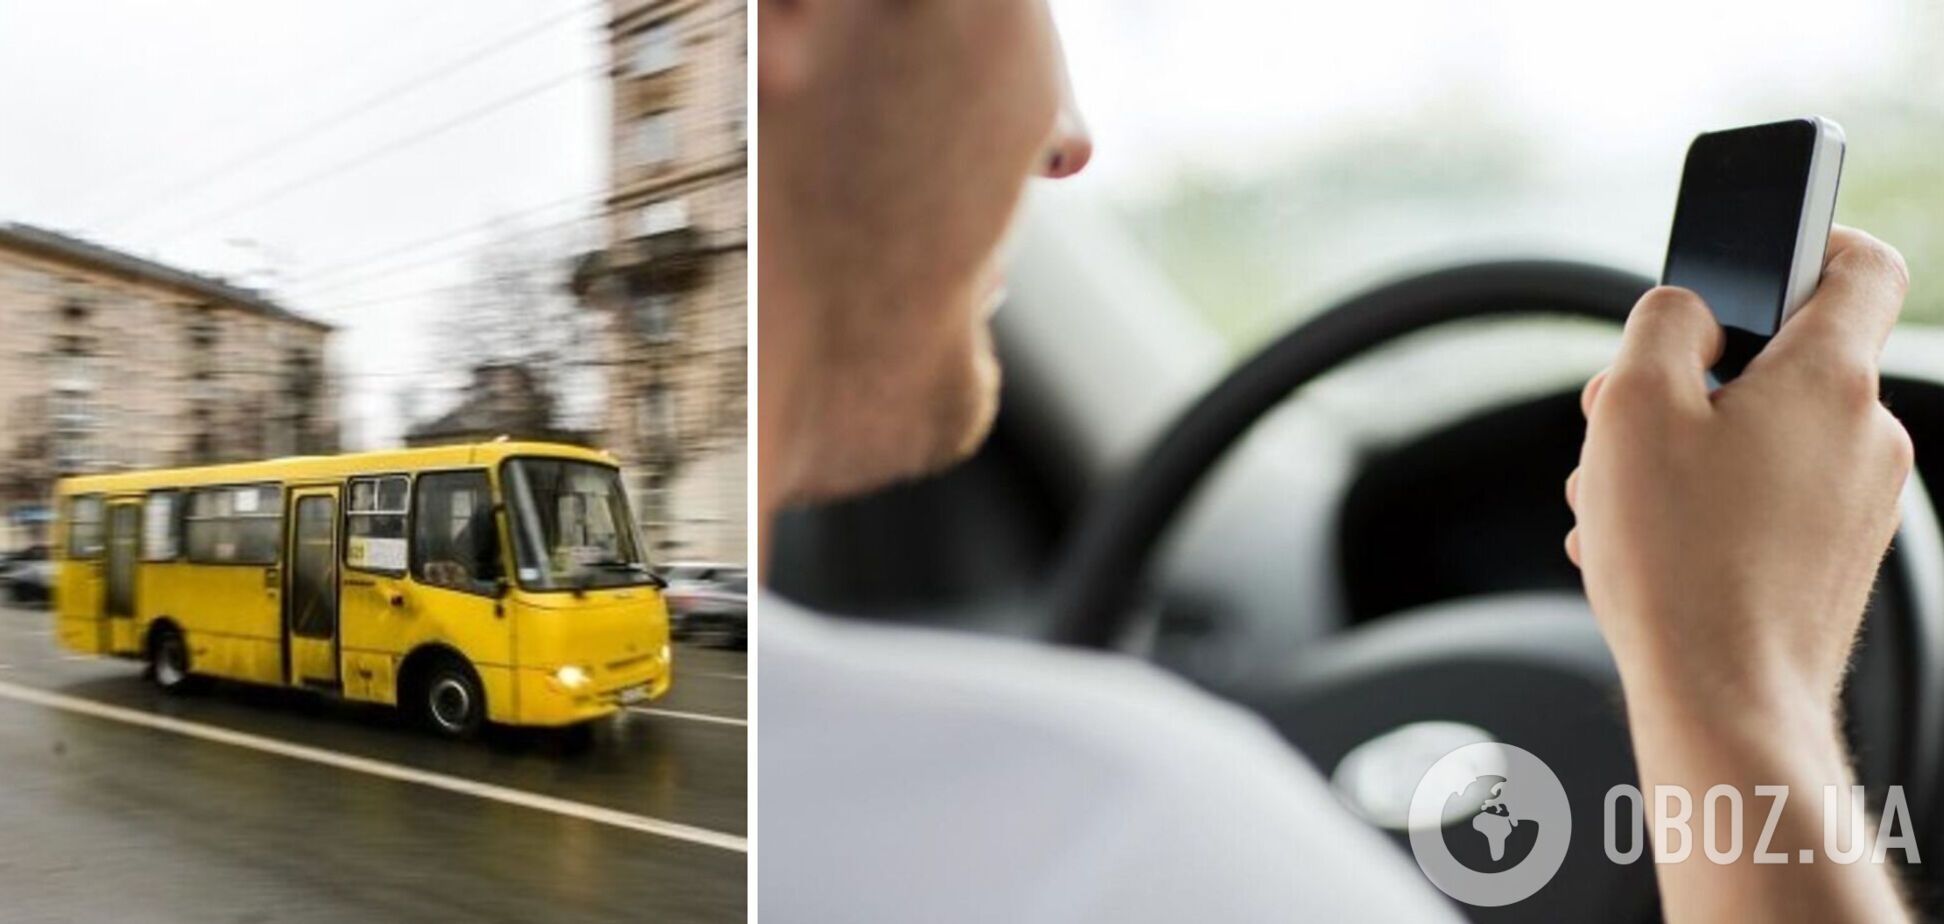 В Харькове водитель играл на телефоне за рулем маршрутки: очевидцы сняли все на видео